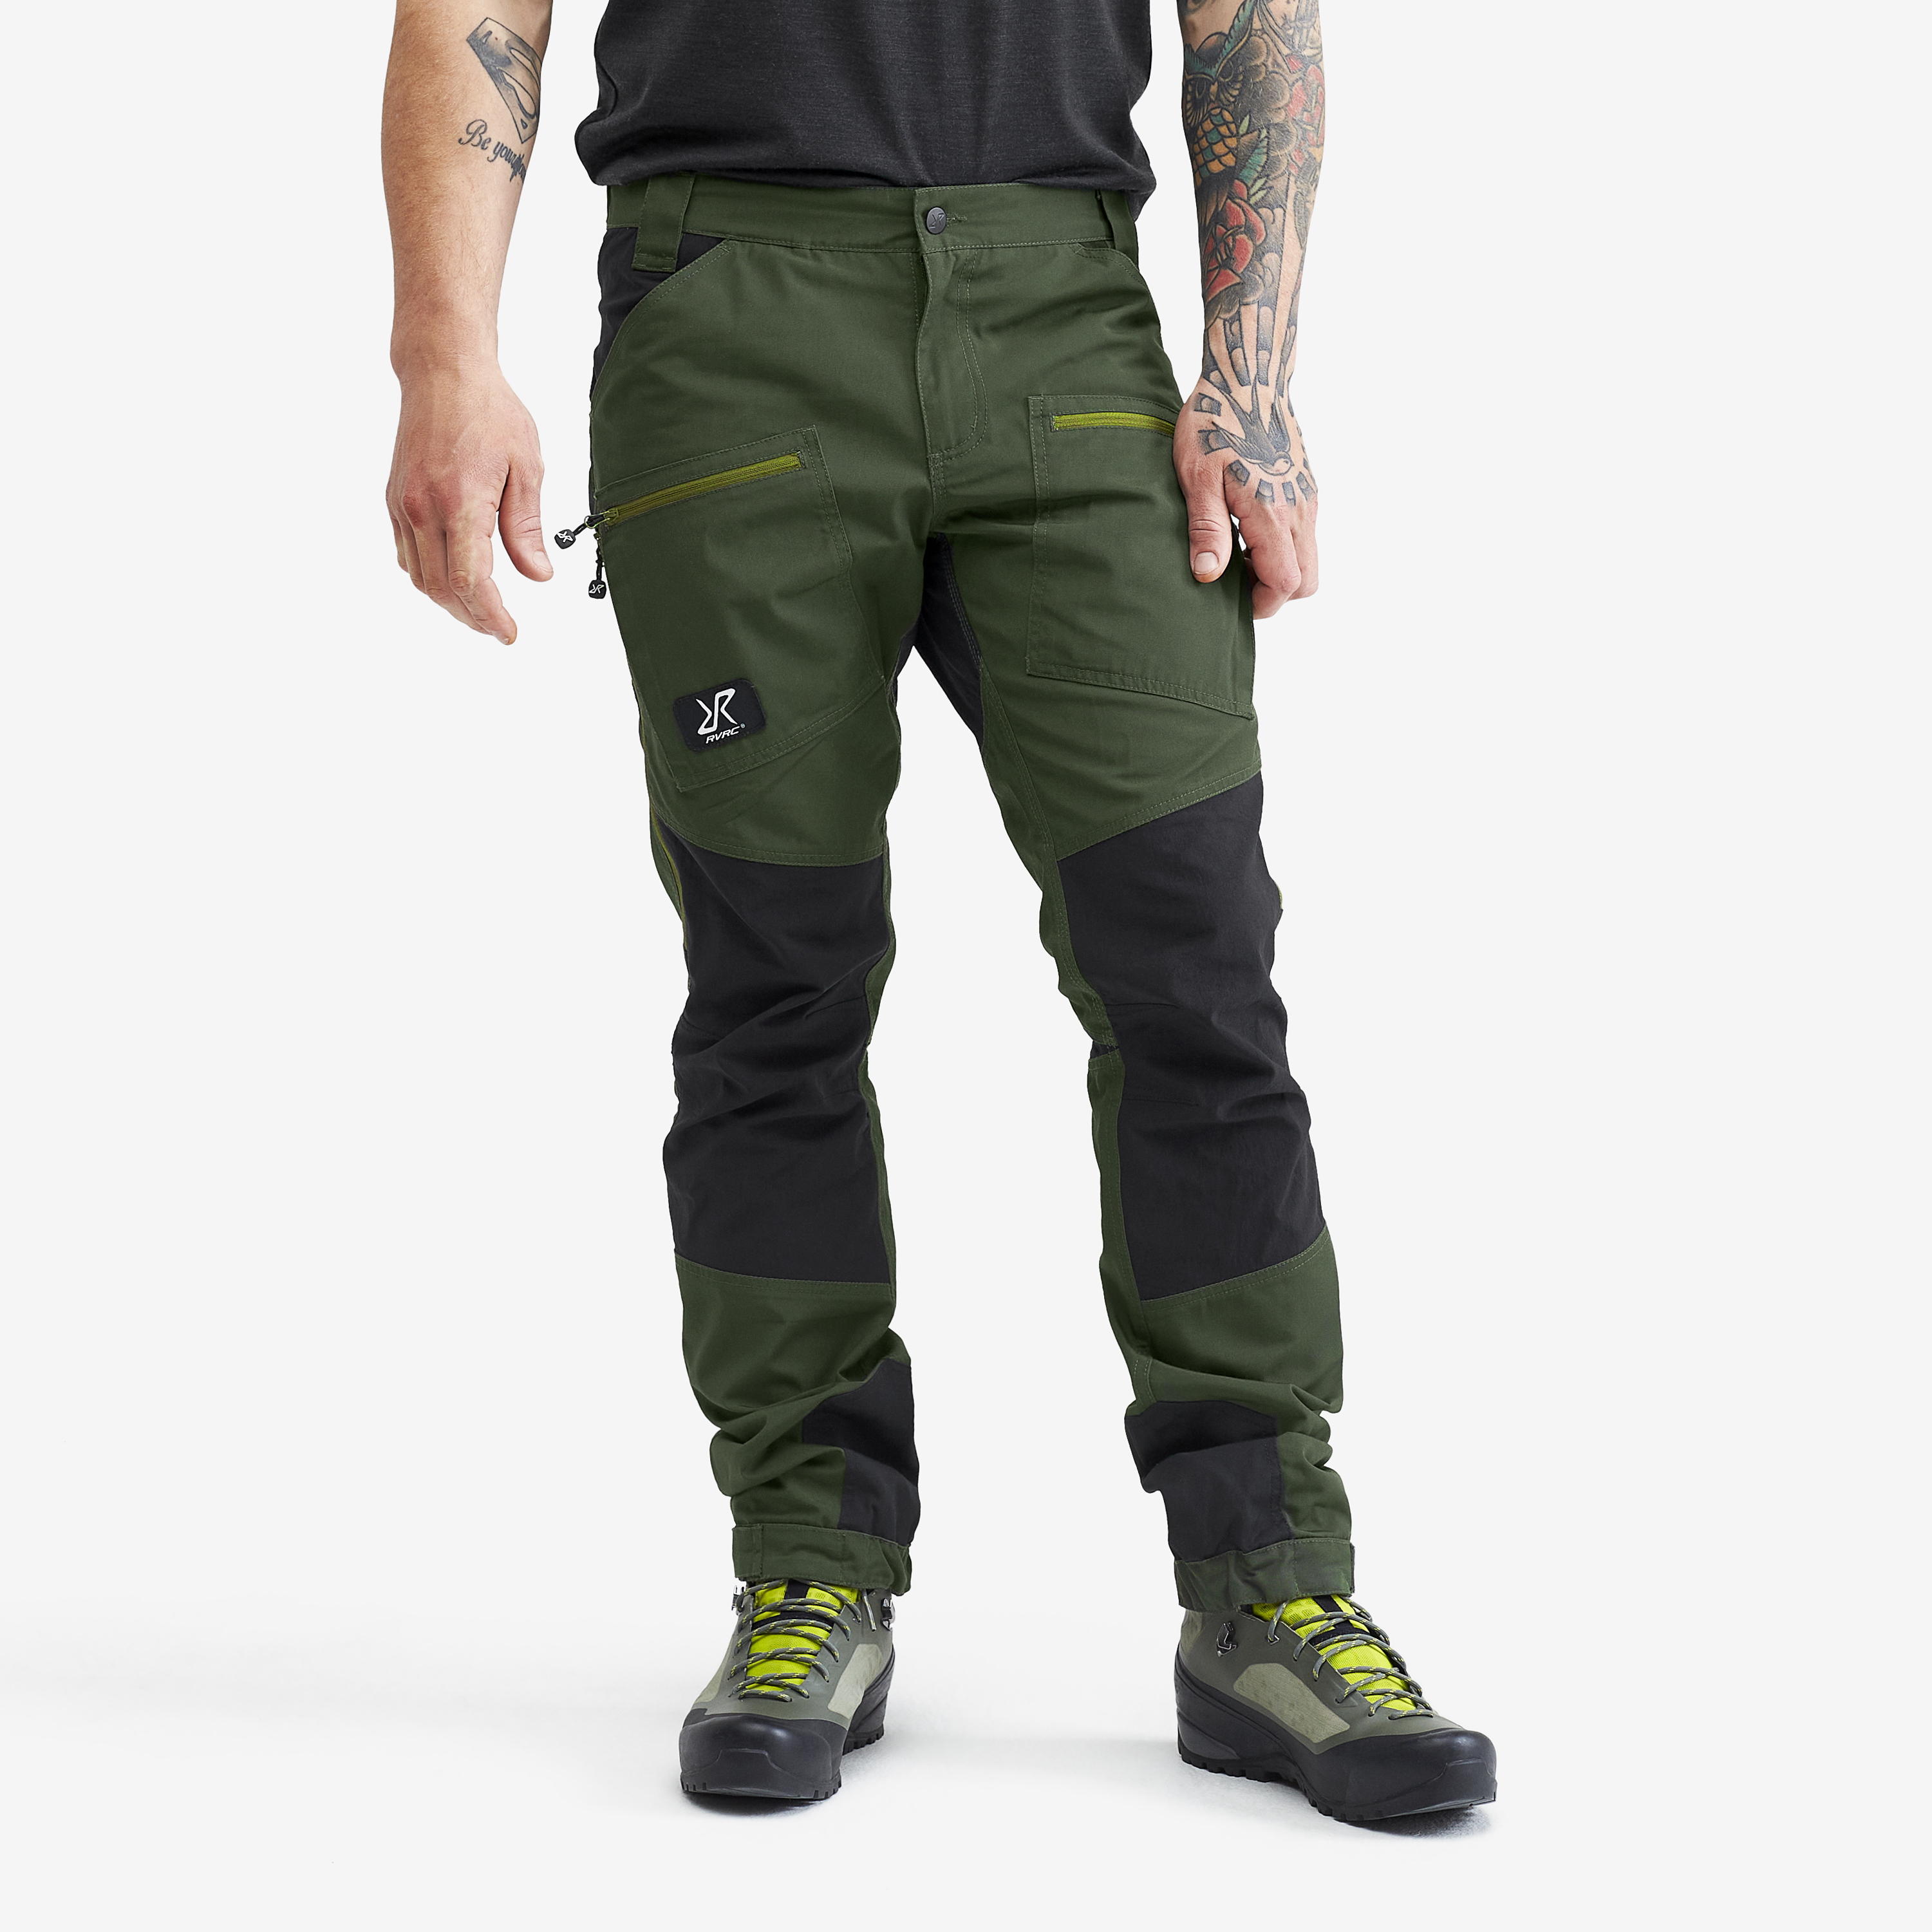 Nordwand Pro Trousers Green/Black Men